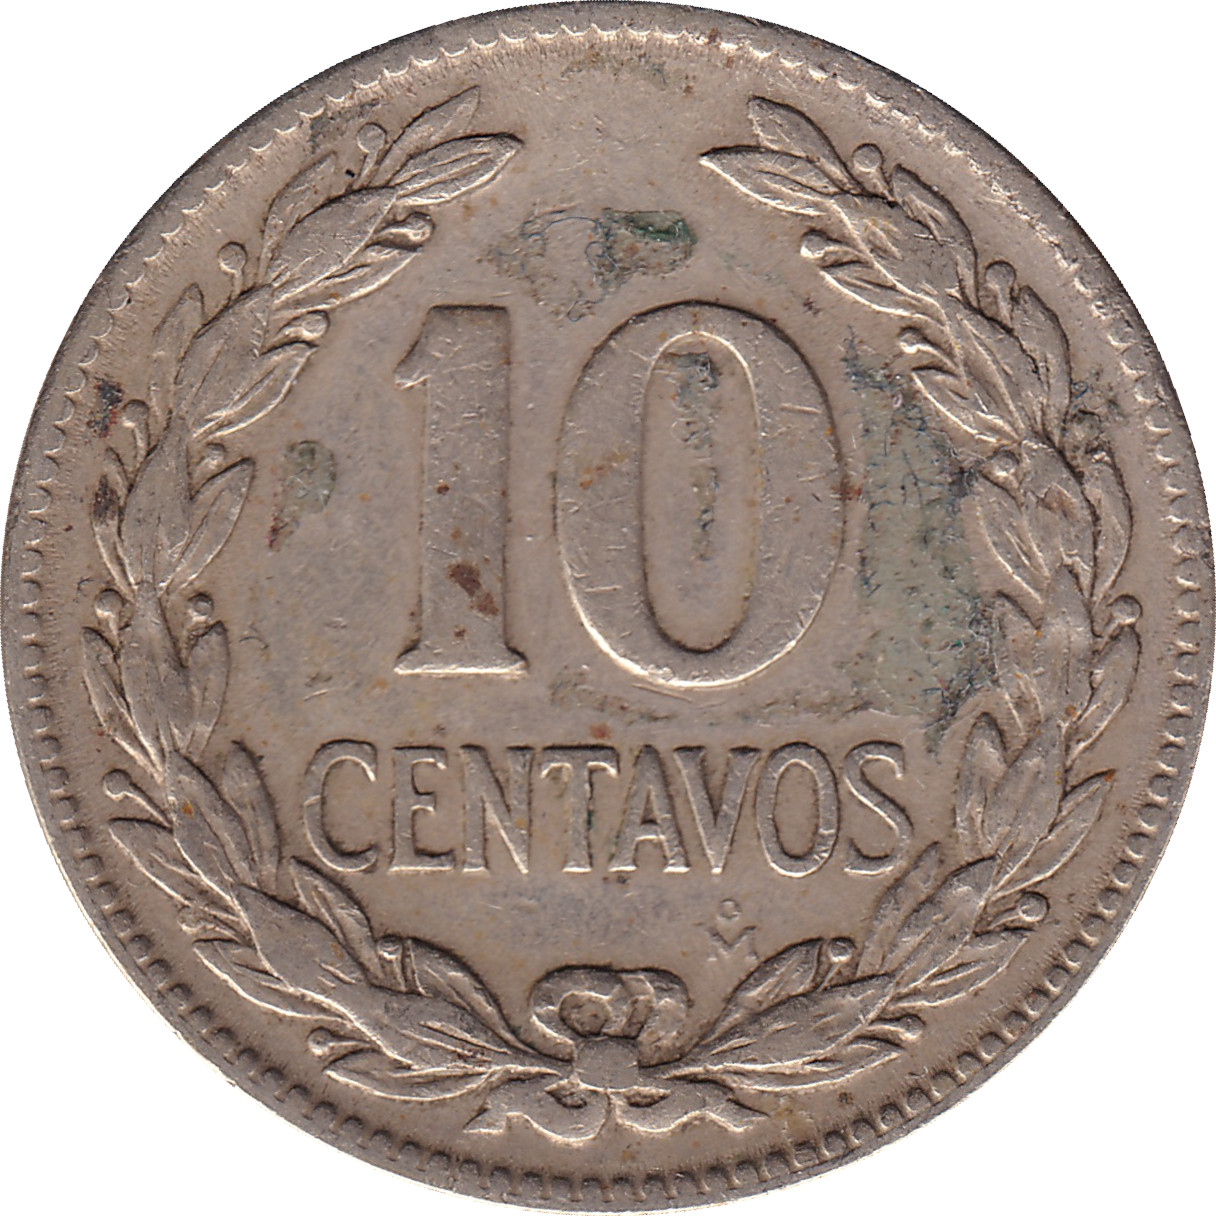 10 centavos - Francisco Morazan - Type 1